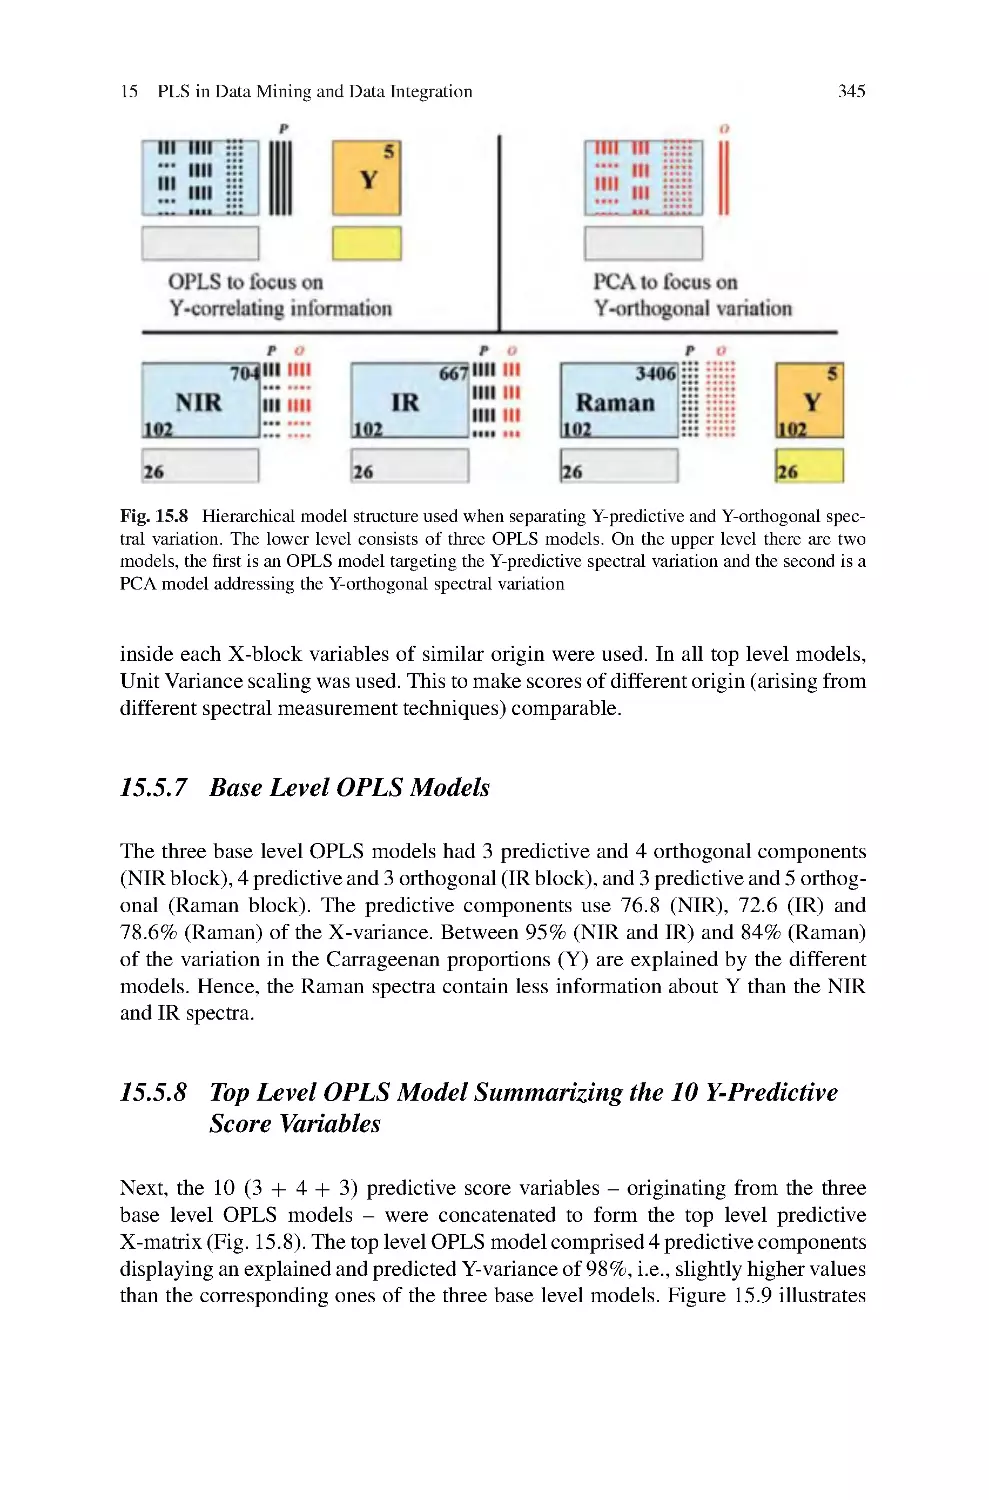 15.5.7 Base Level OPLS Models
15.5.8 Top Level OPLS Model Summarizing the 10 Y-Predictive Score Variables